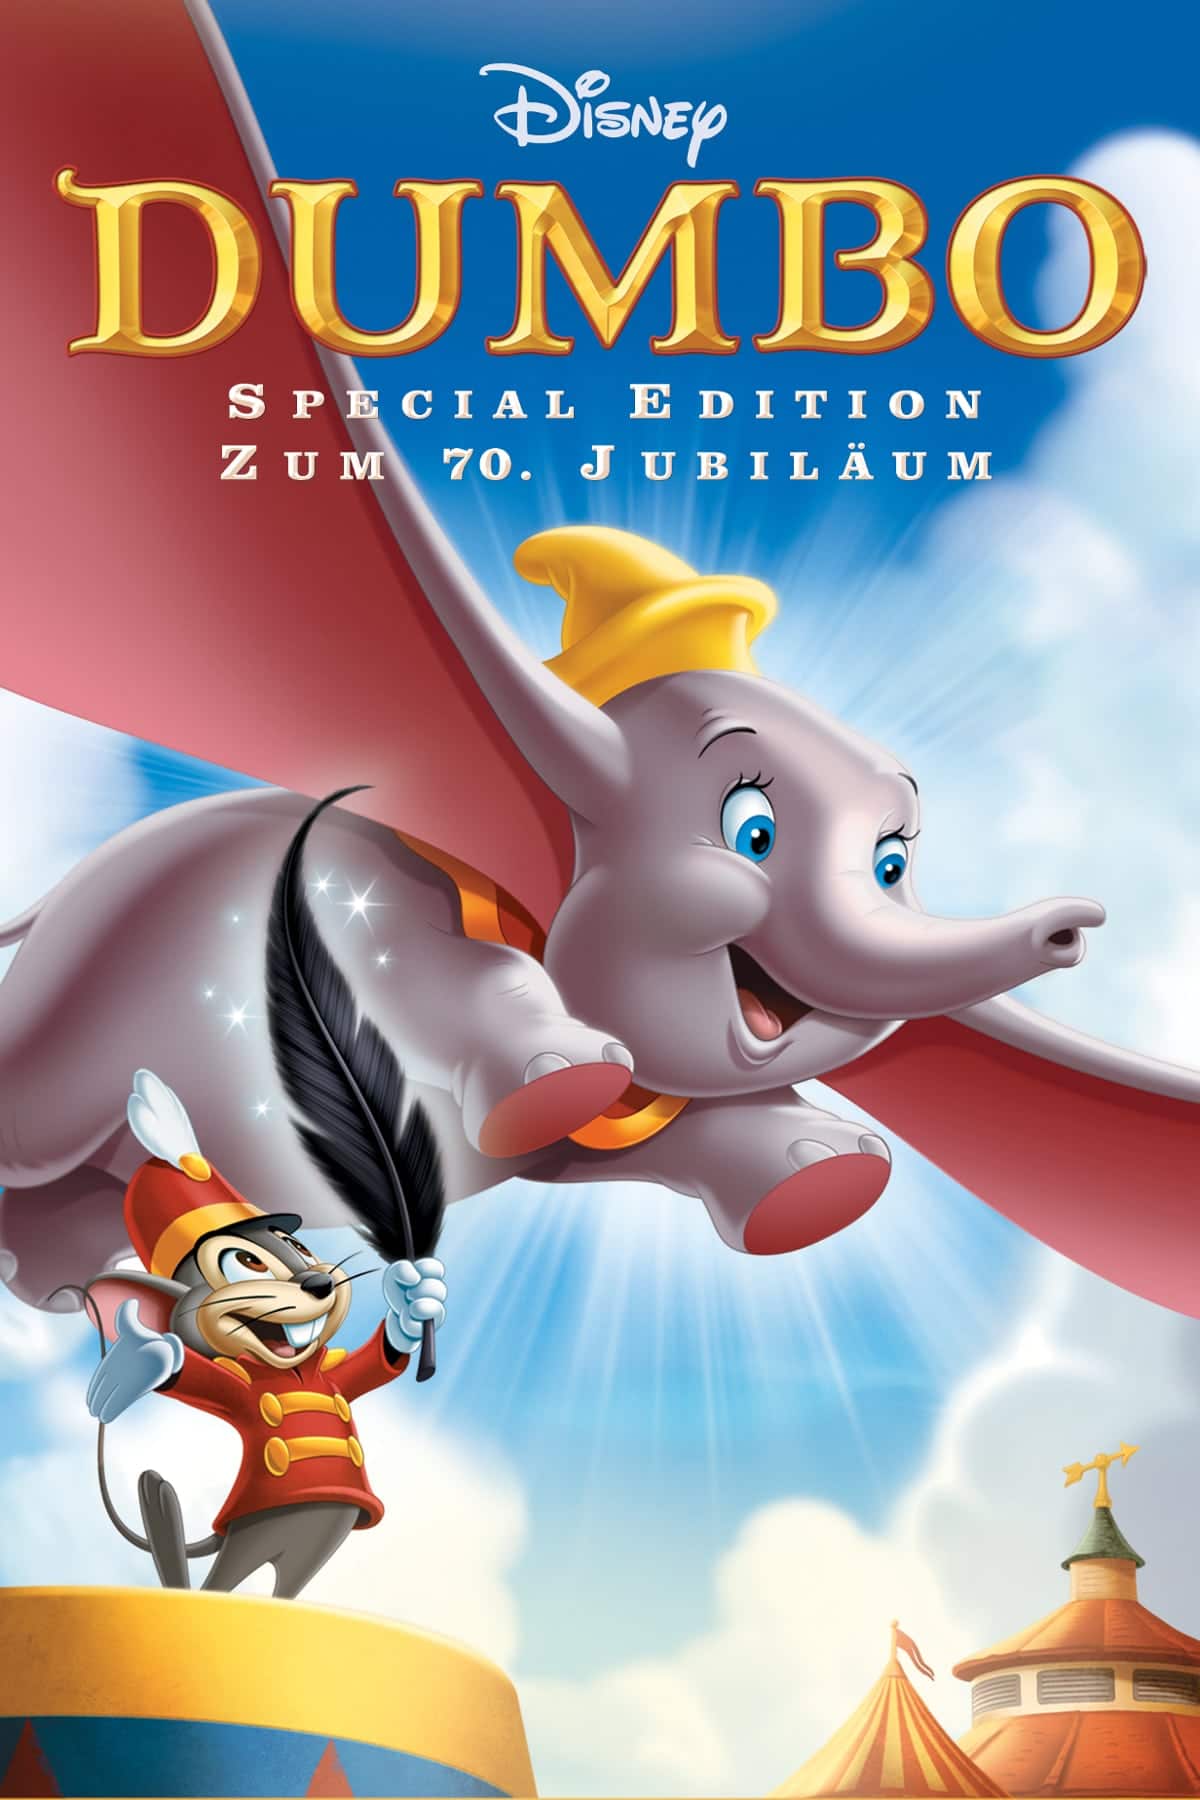 Plakat von "Dumbo"